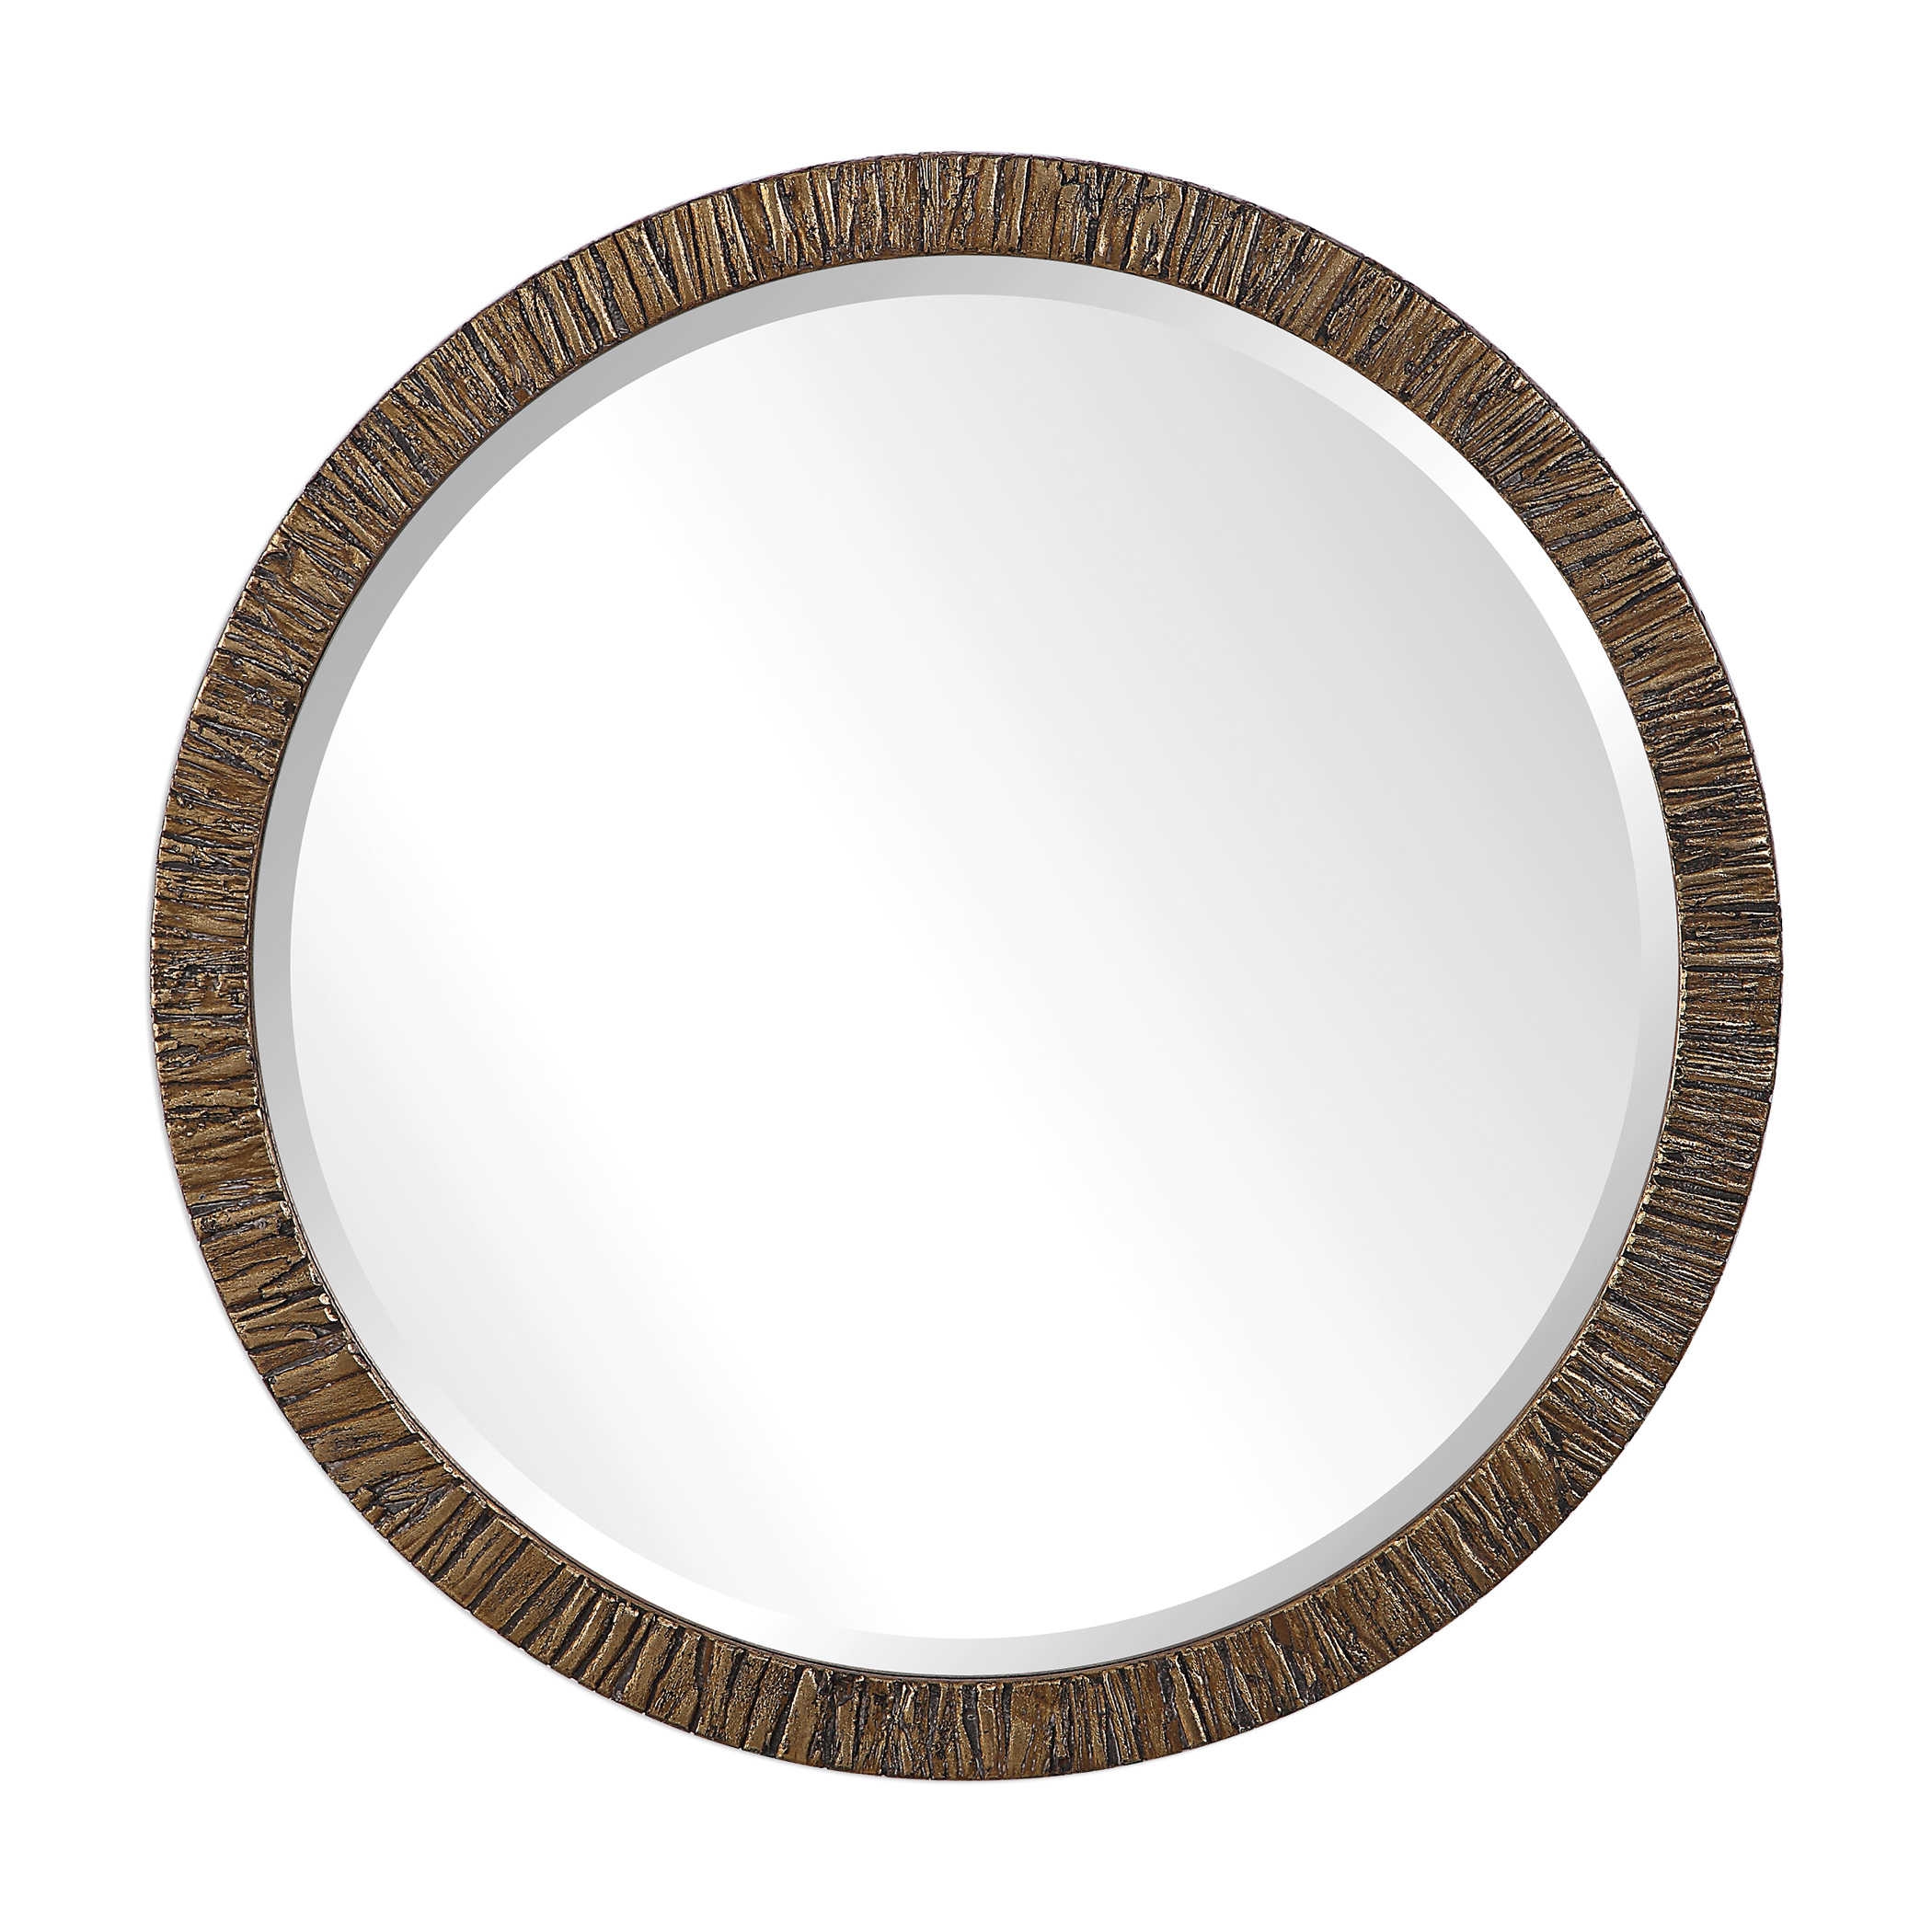 Wayde Round Mirror - Image 0